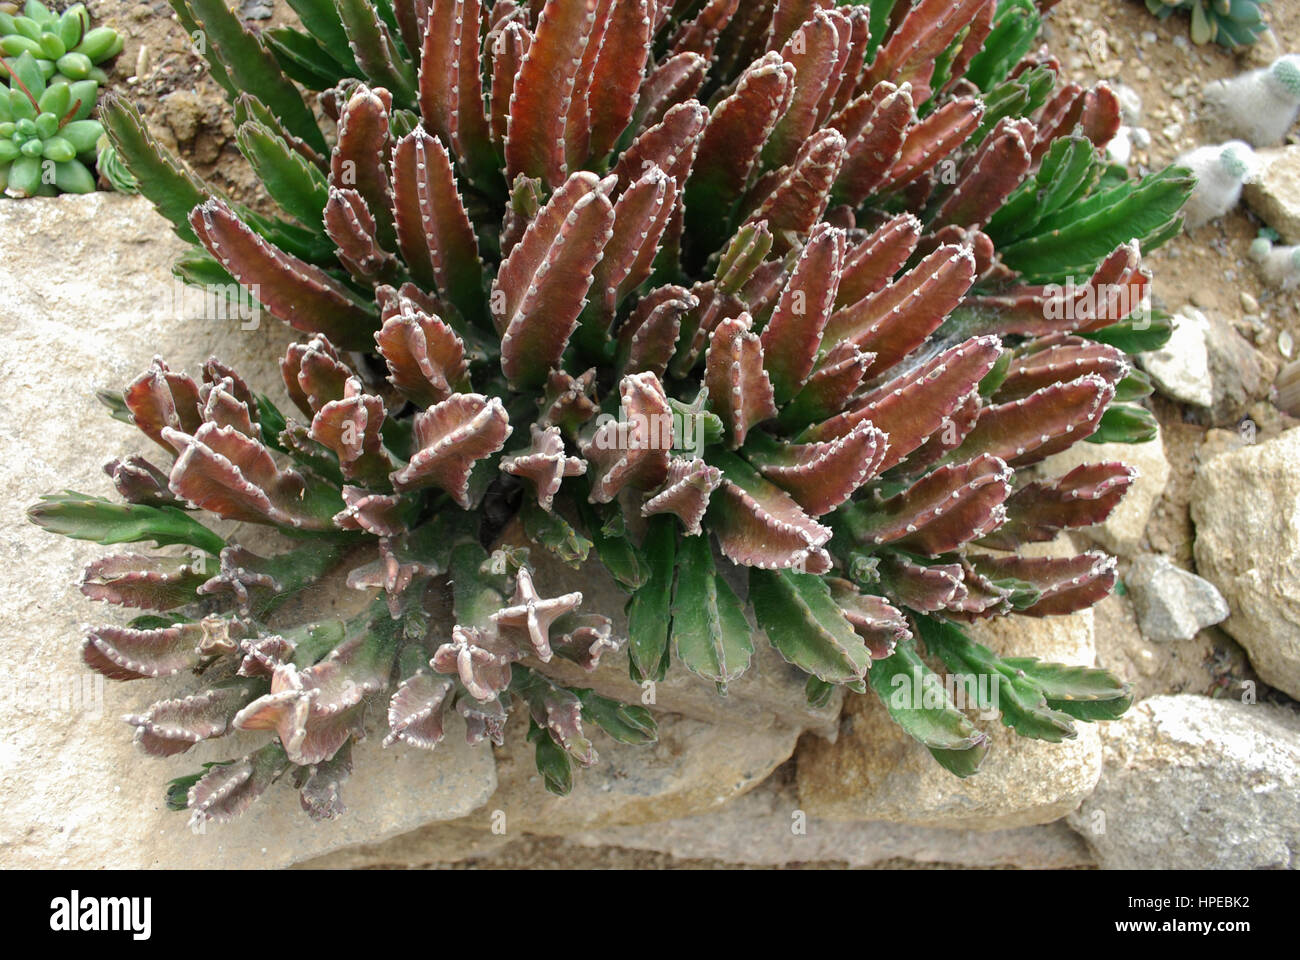 Stapelia grandiflora (carrion plant, starfish flower, or starfish cactus) is a flowering plant in the Stapelia genus. Stock Photo